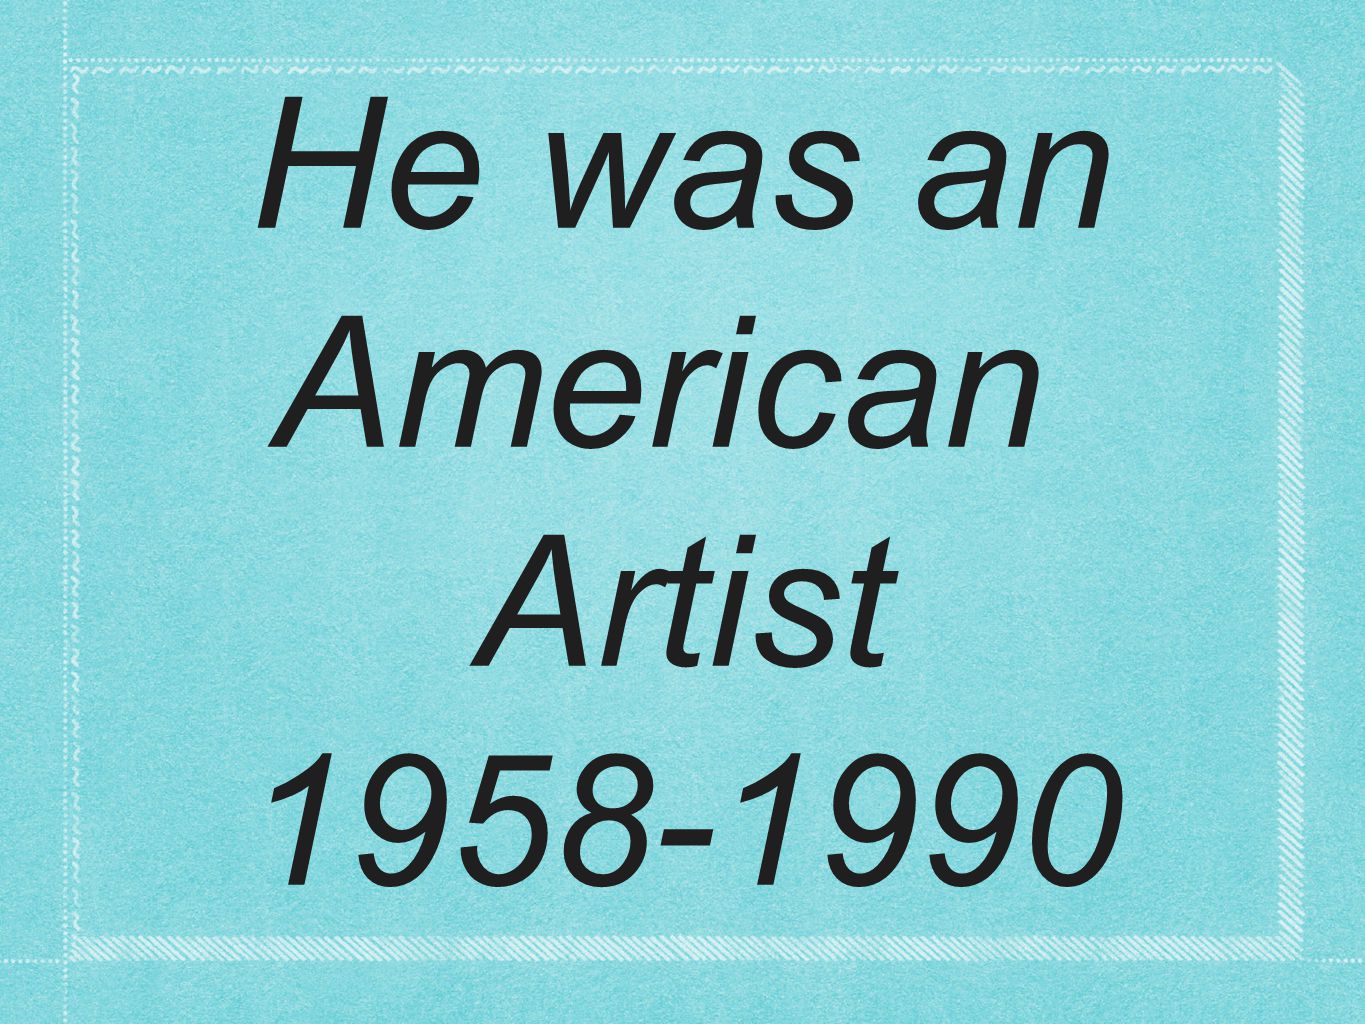 He was an American Artist